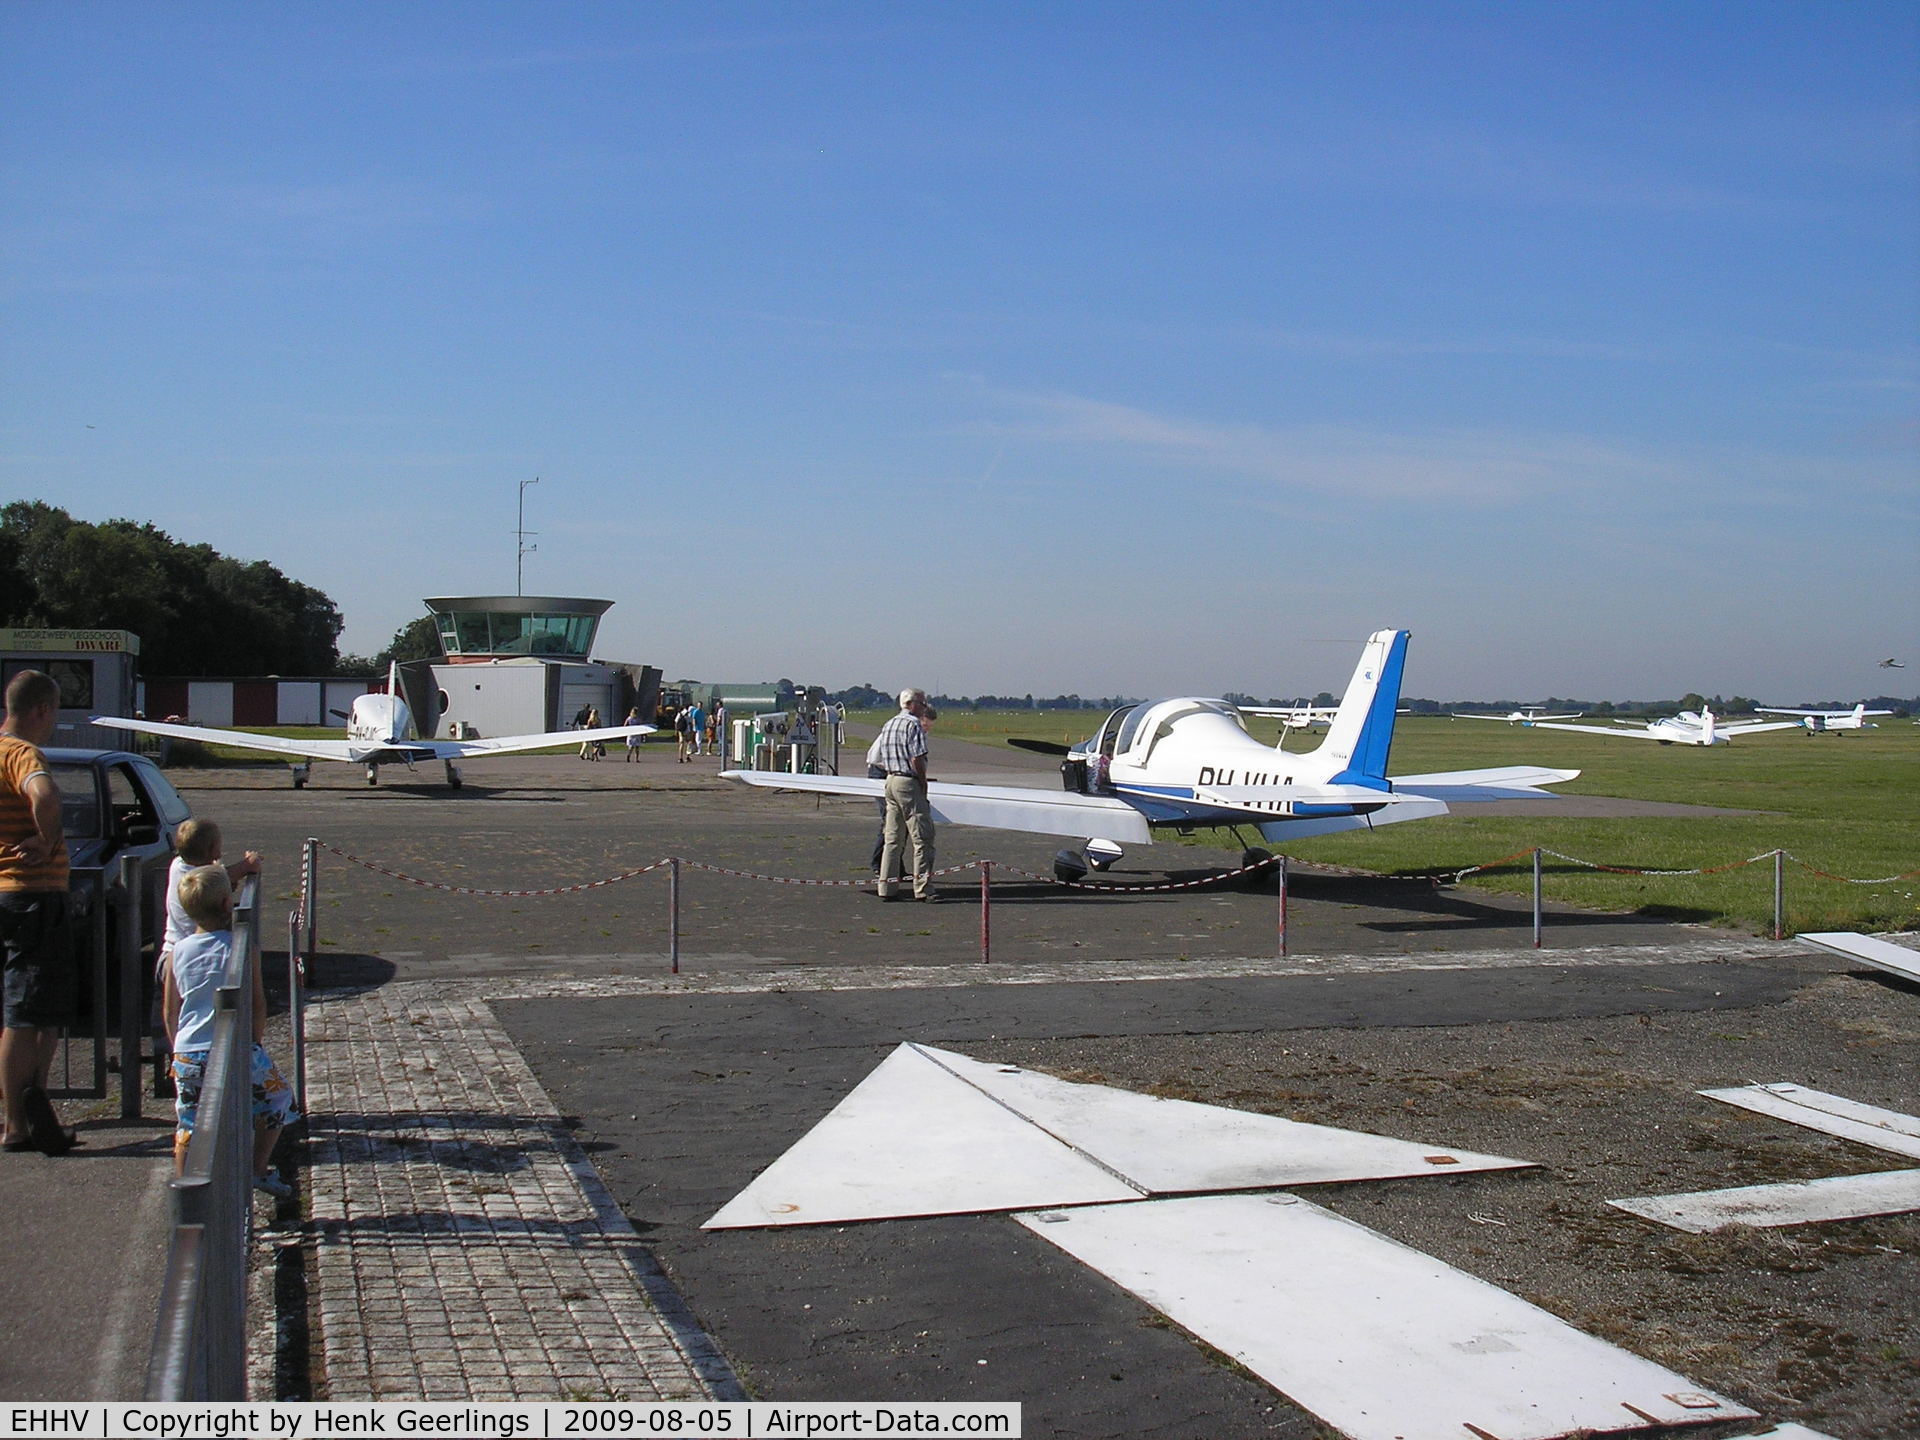 Hilversum Airport, Hilversum Netherlands (EHHV) - Hilversum Aerodrome